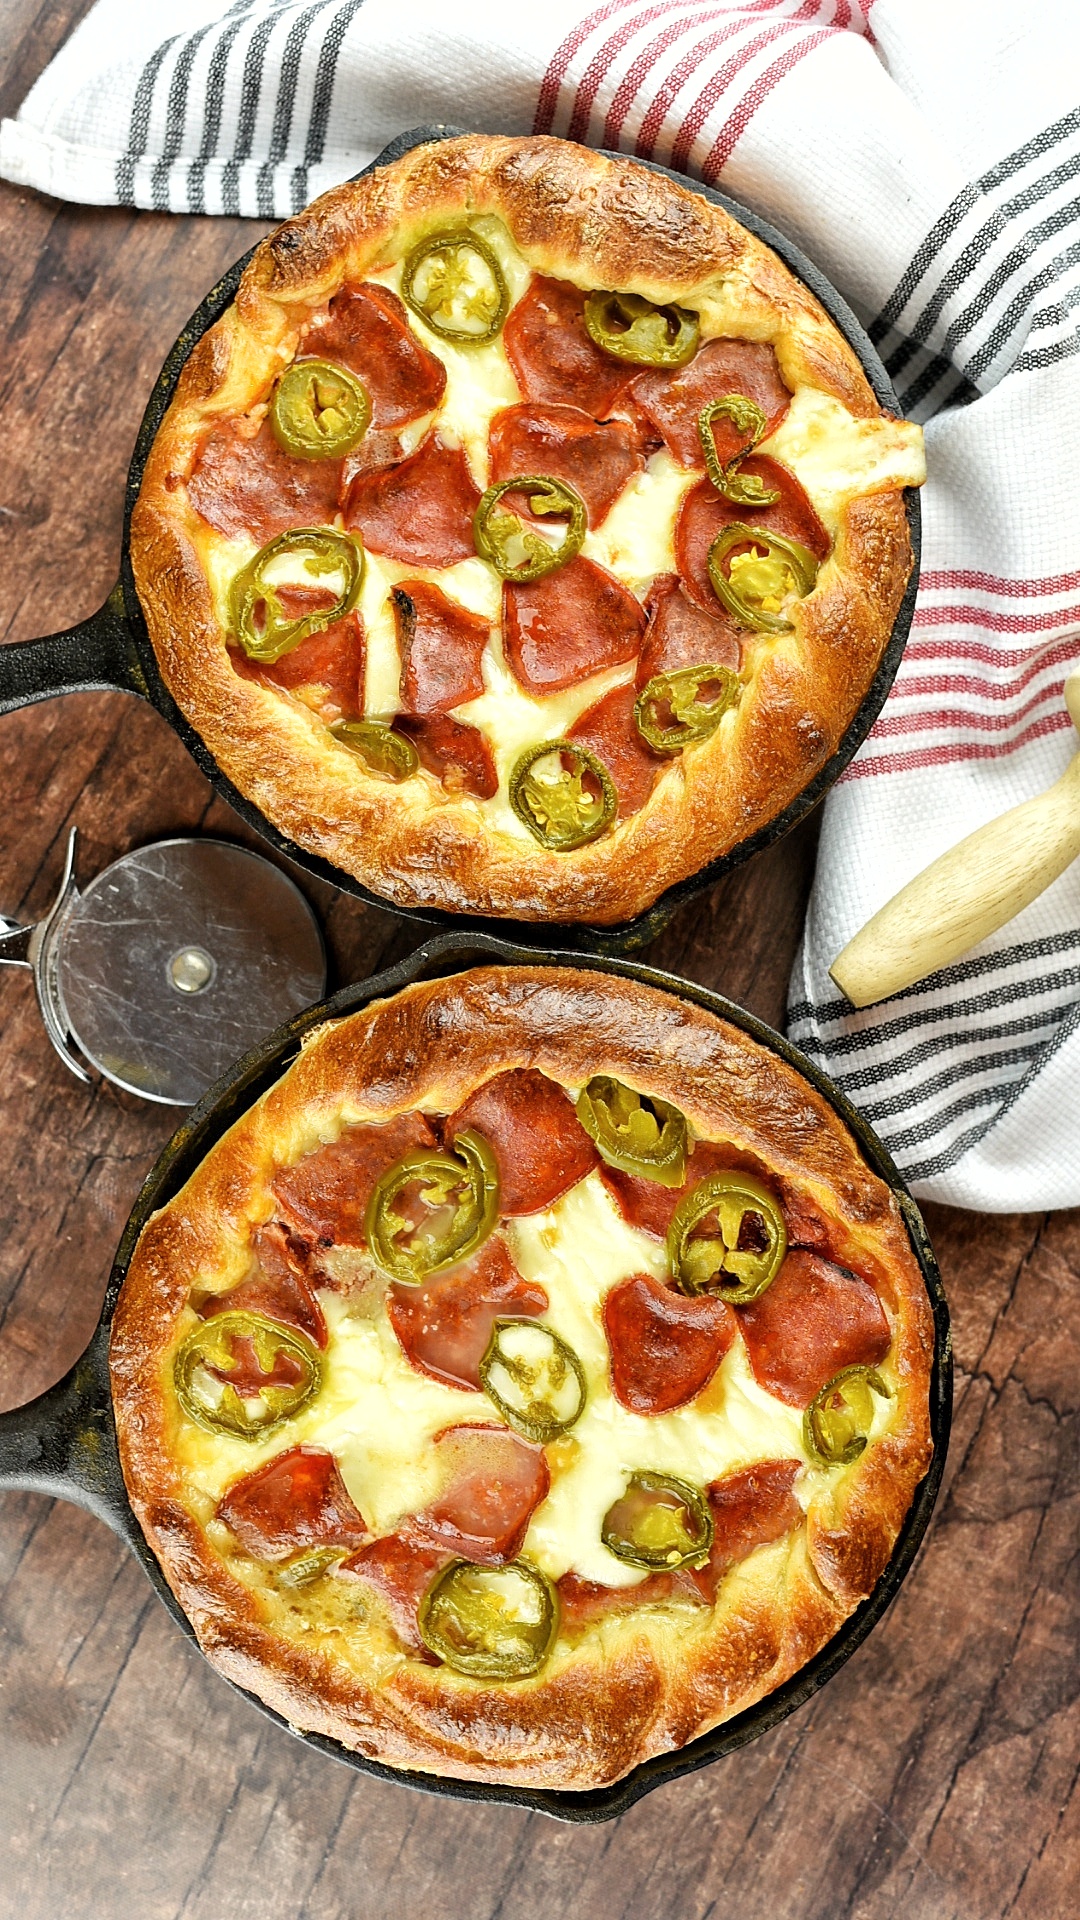 Mini Jalapeño Pepperoni Pizzas